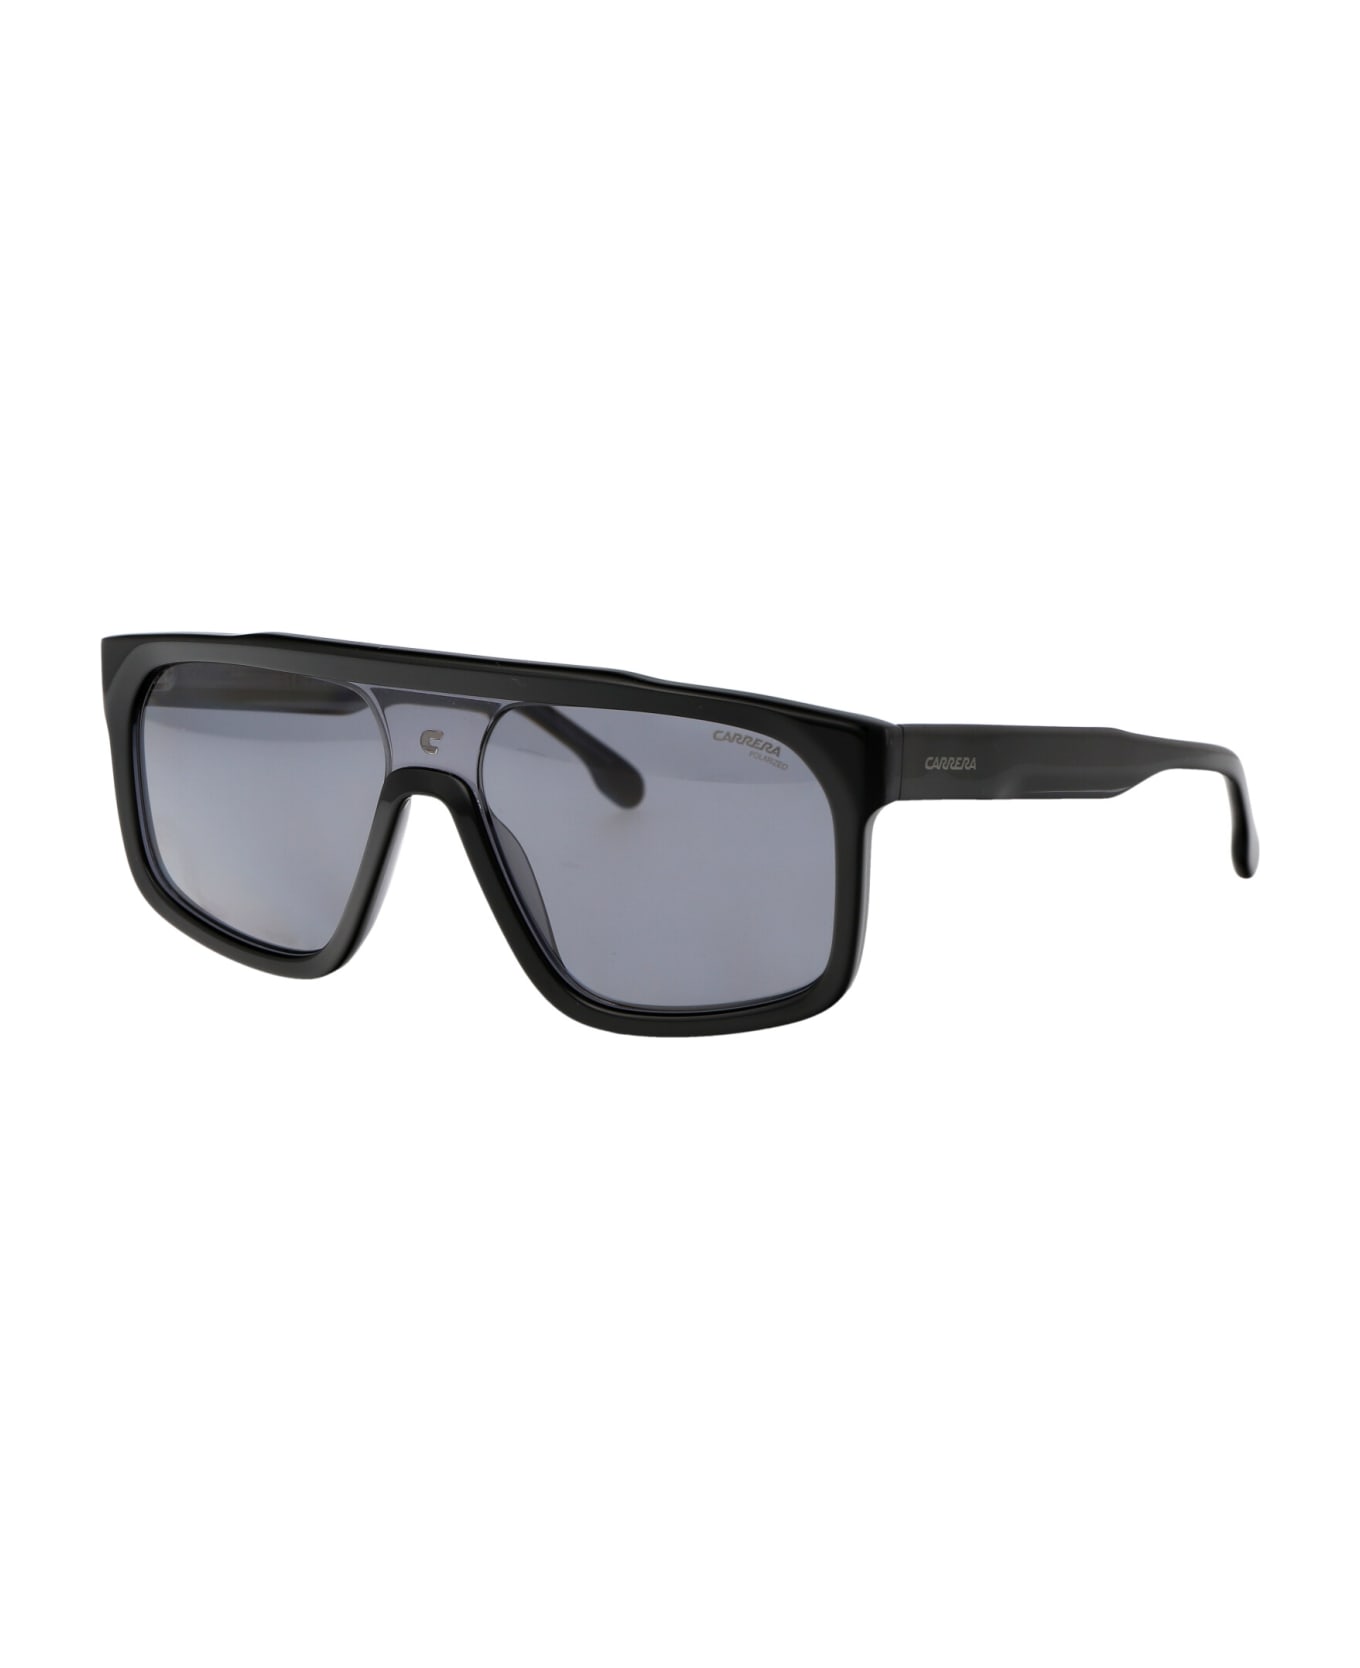 Carrera 1061/s Sunglasses - 08AM9 BLACK GREY